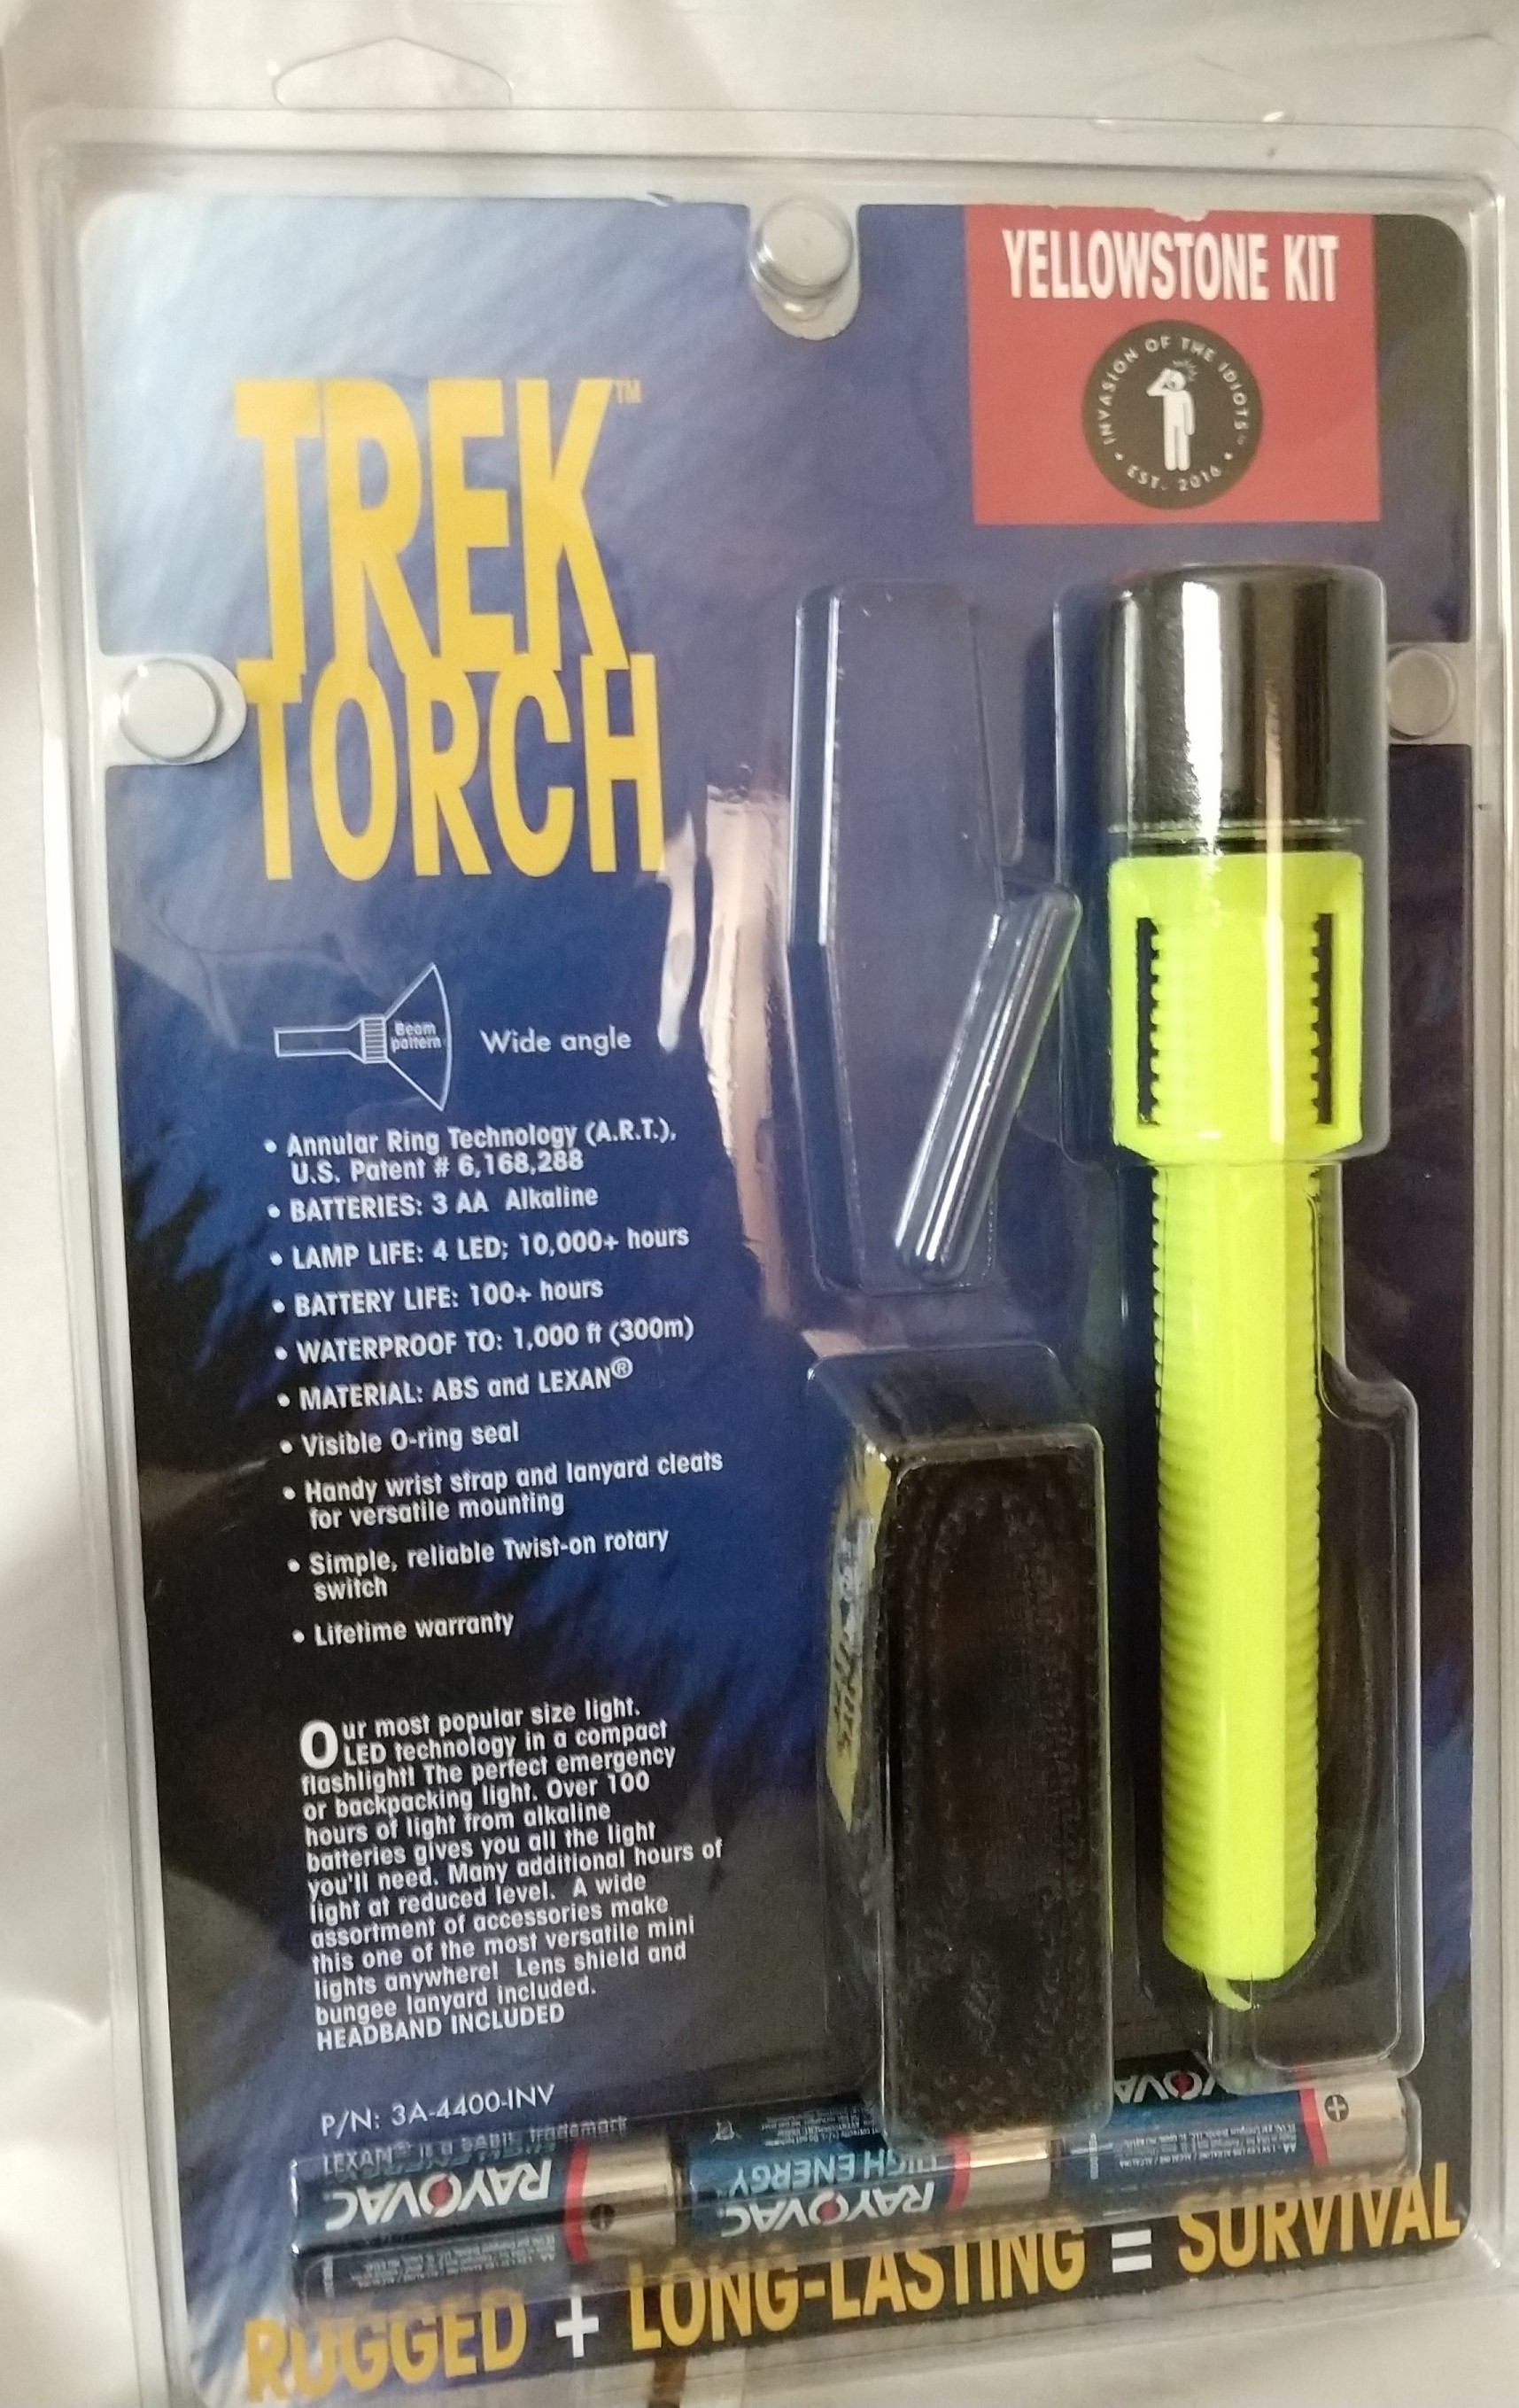 Trek Torch Yellowstone Kit